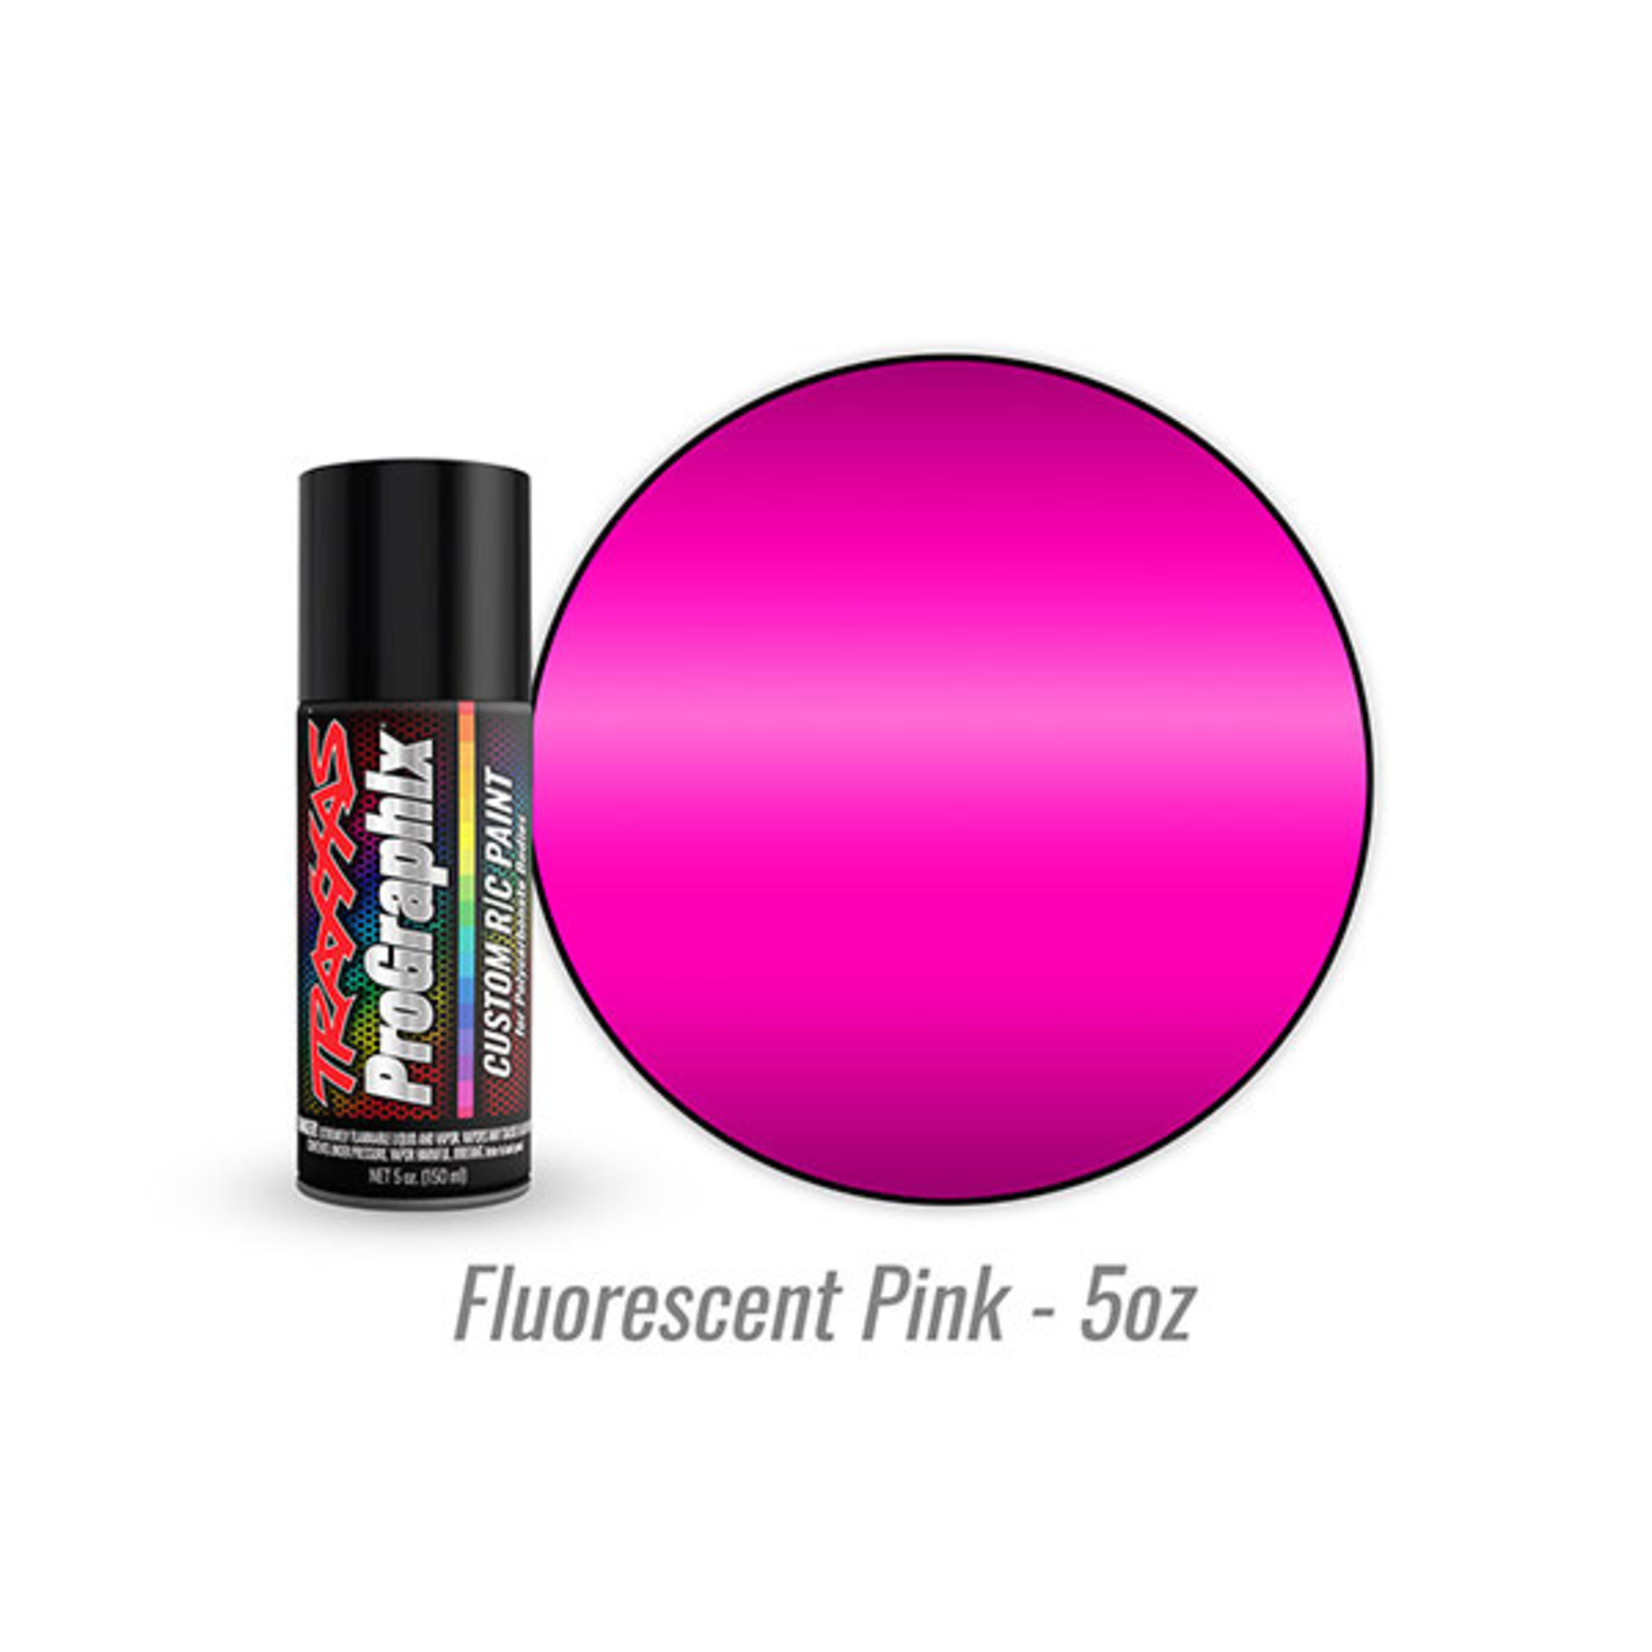 Traxxas 5065 - Body paint, ProGraphix, fluorescent pink (5oz)